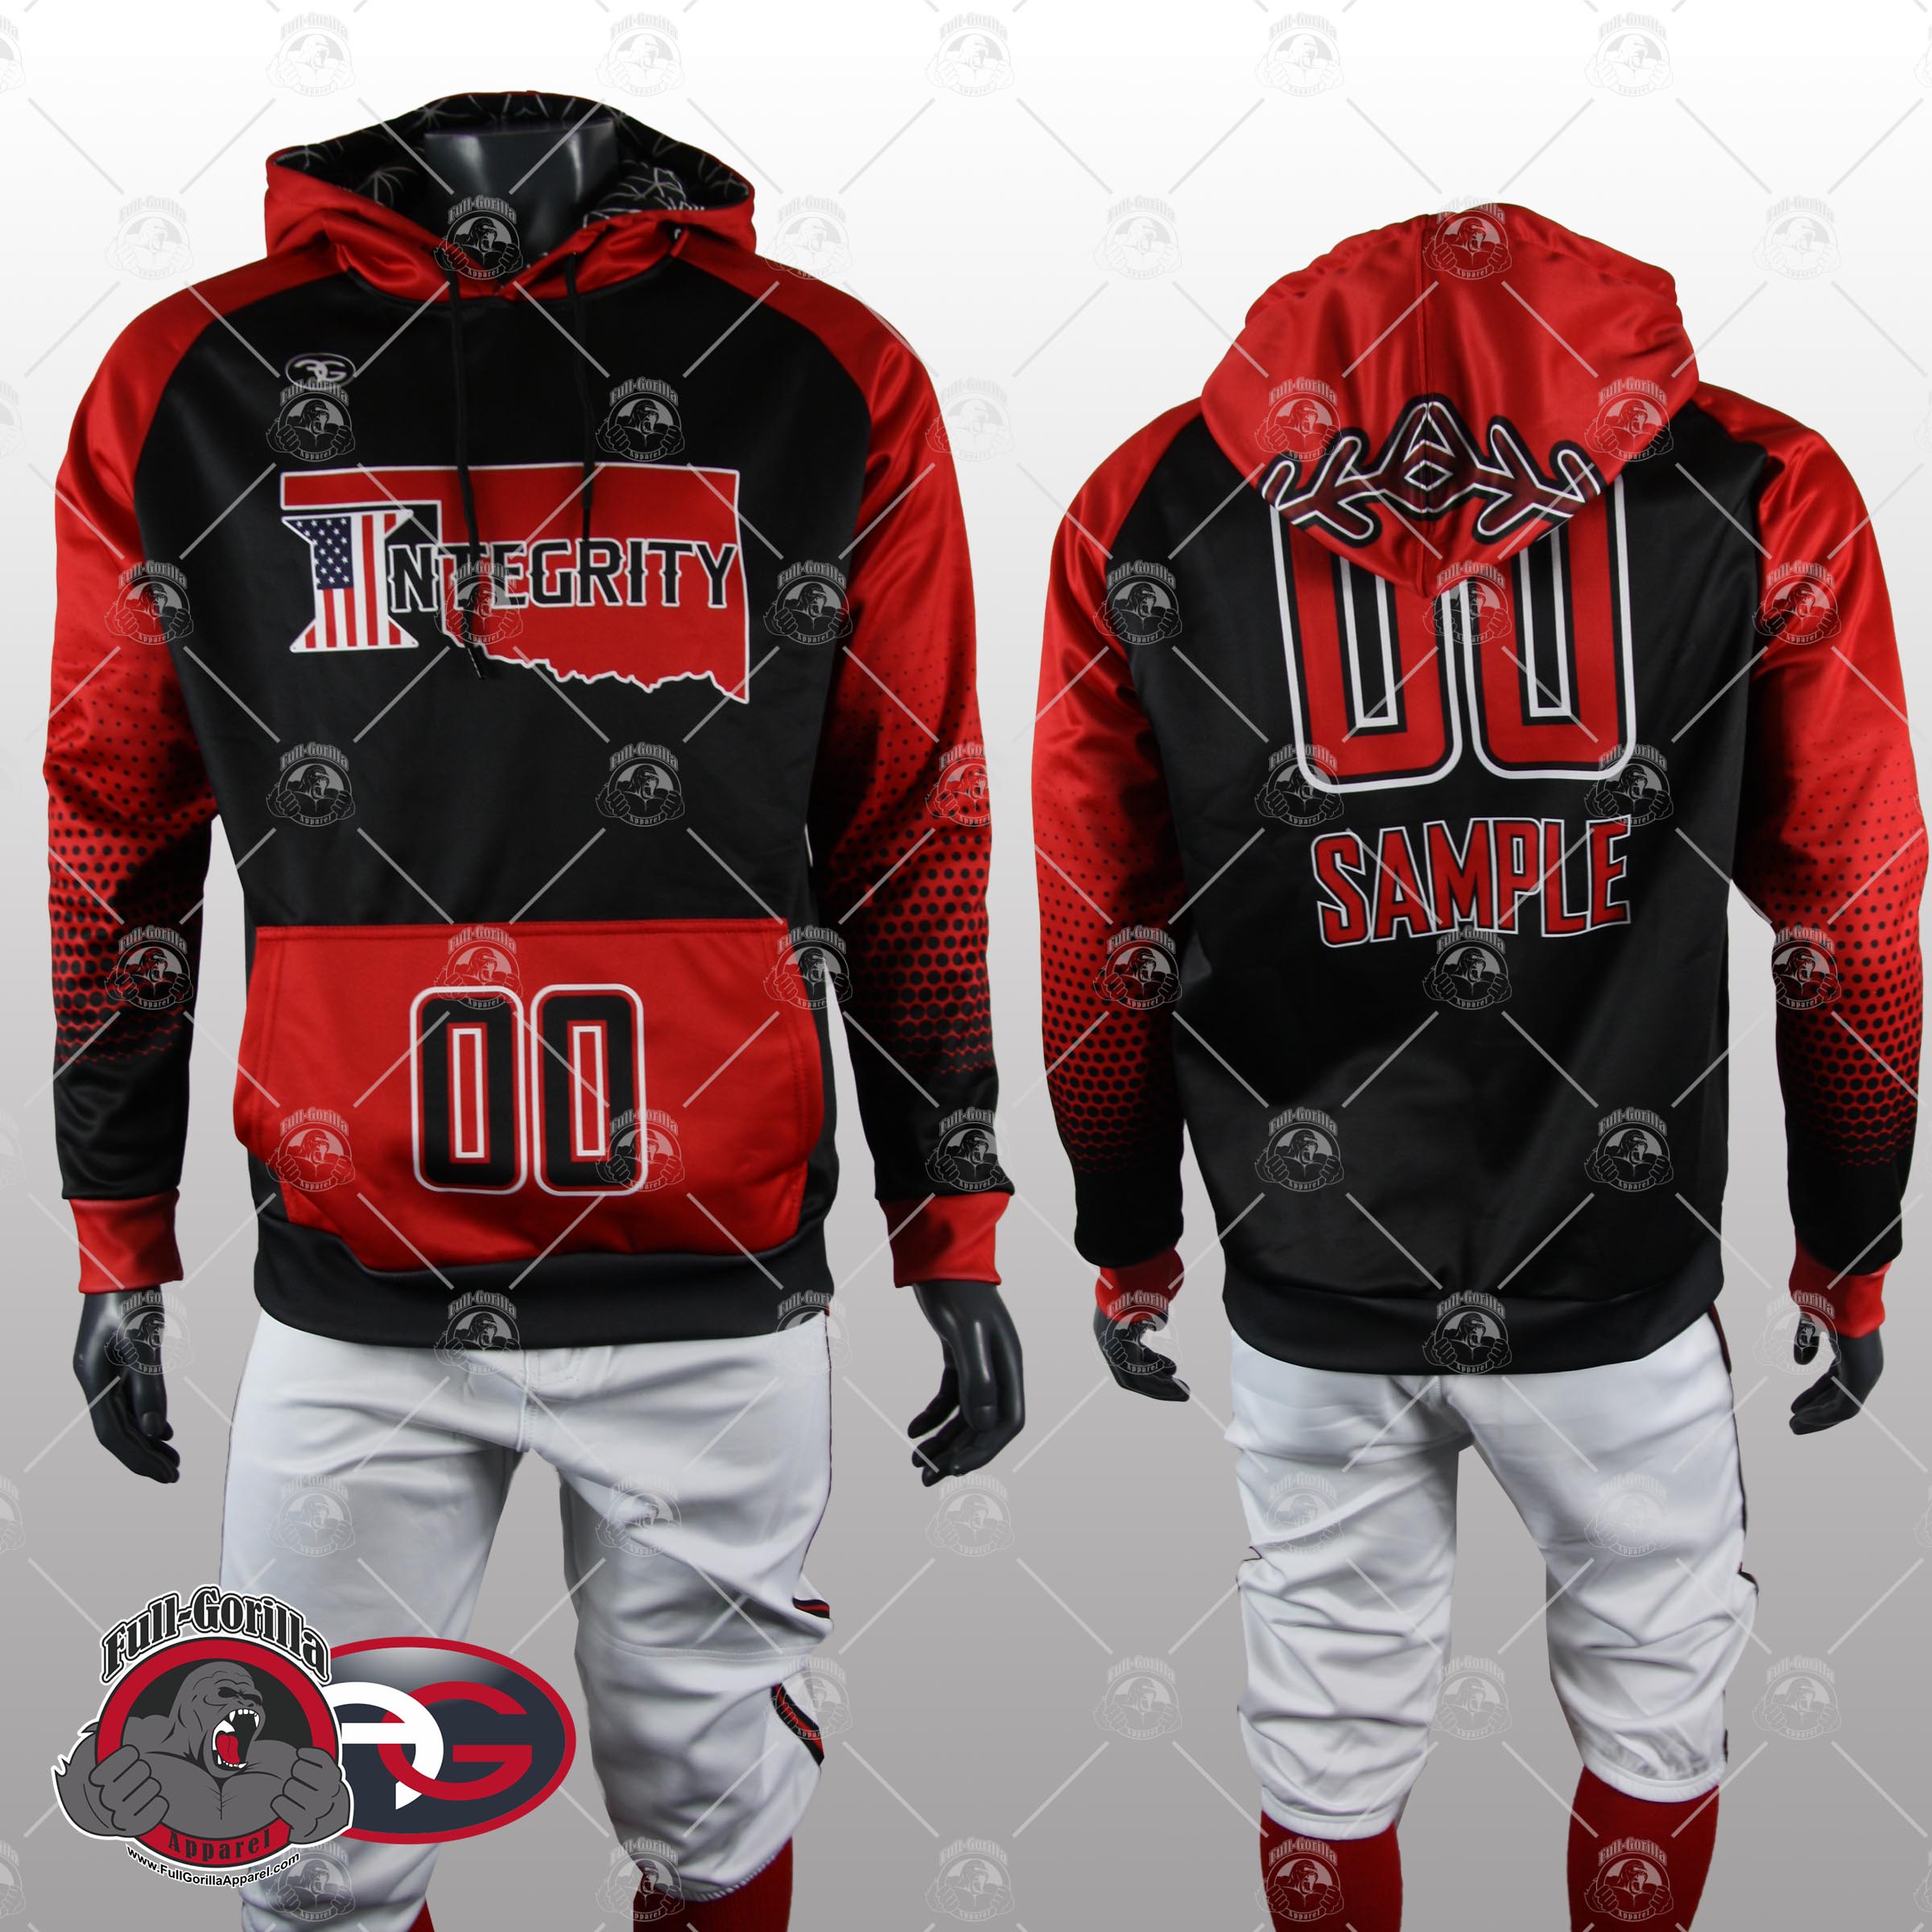 Baseball Uniforms | Custom Baseball Jersey & More by Full Gorilla Apparel